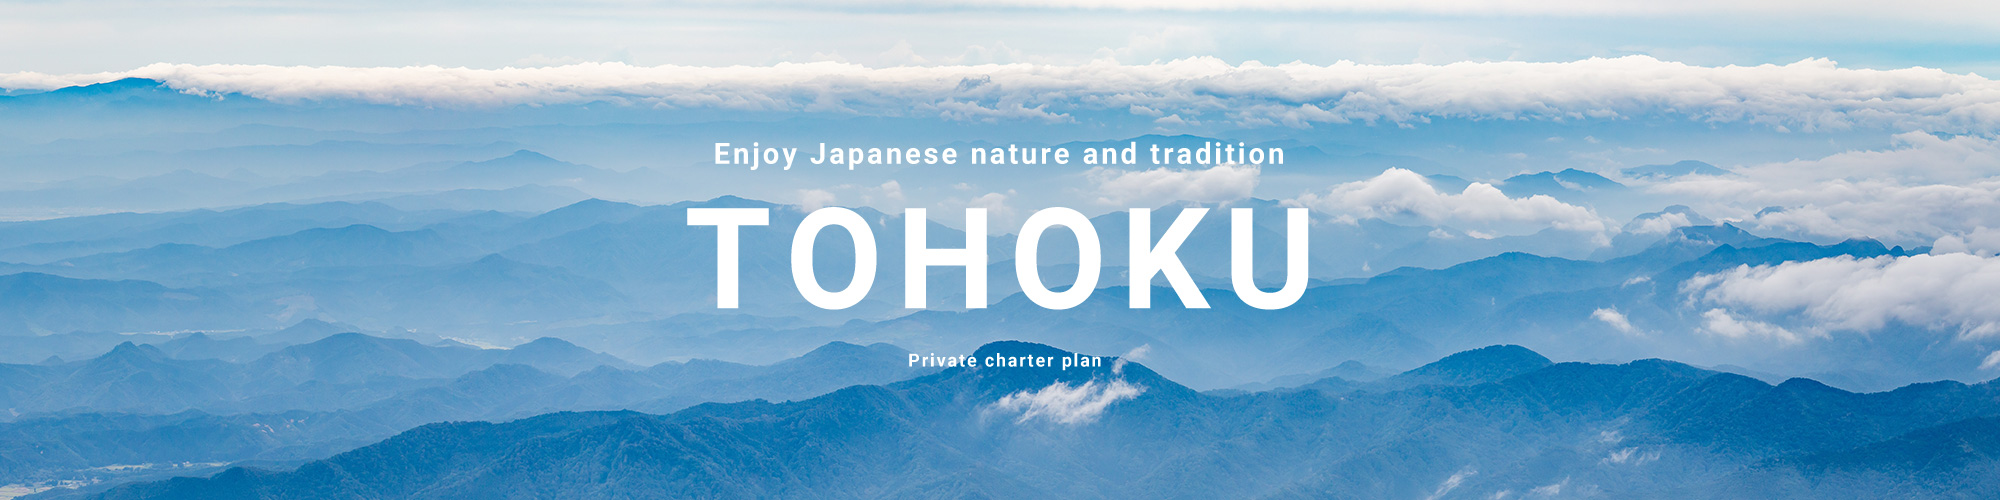 Enjoy Japanese nature and tradition TOHOKU Private charter plan